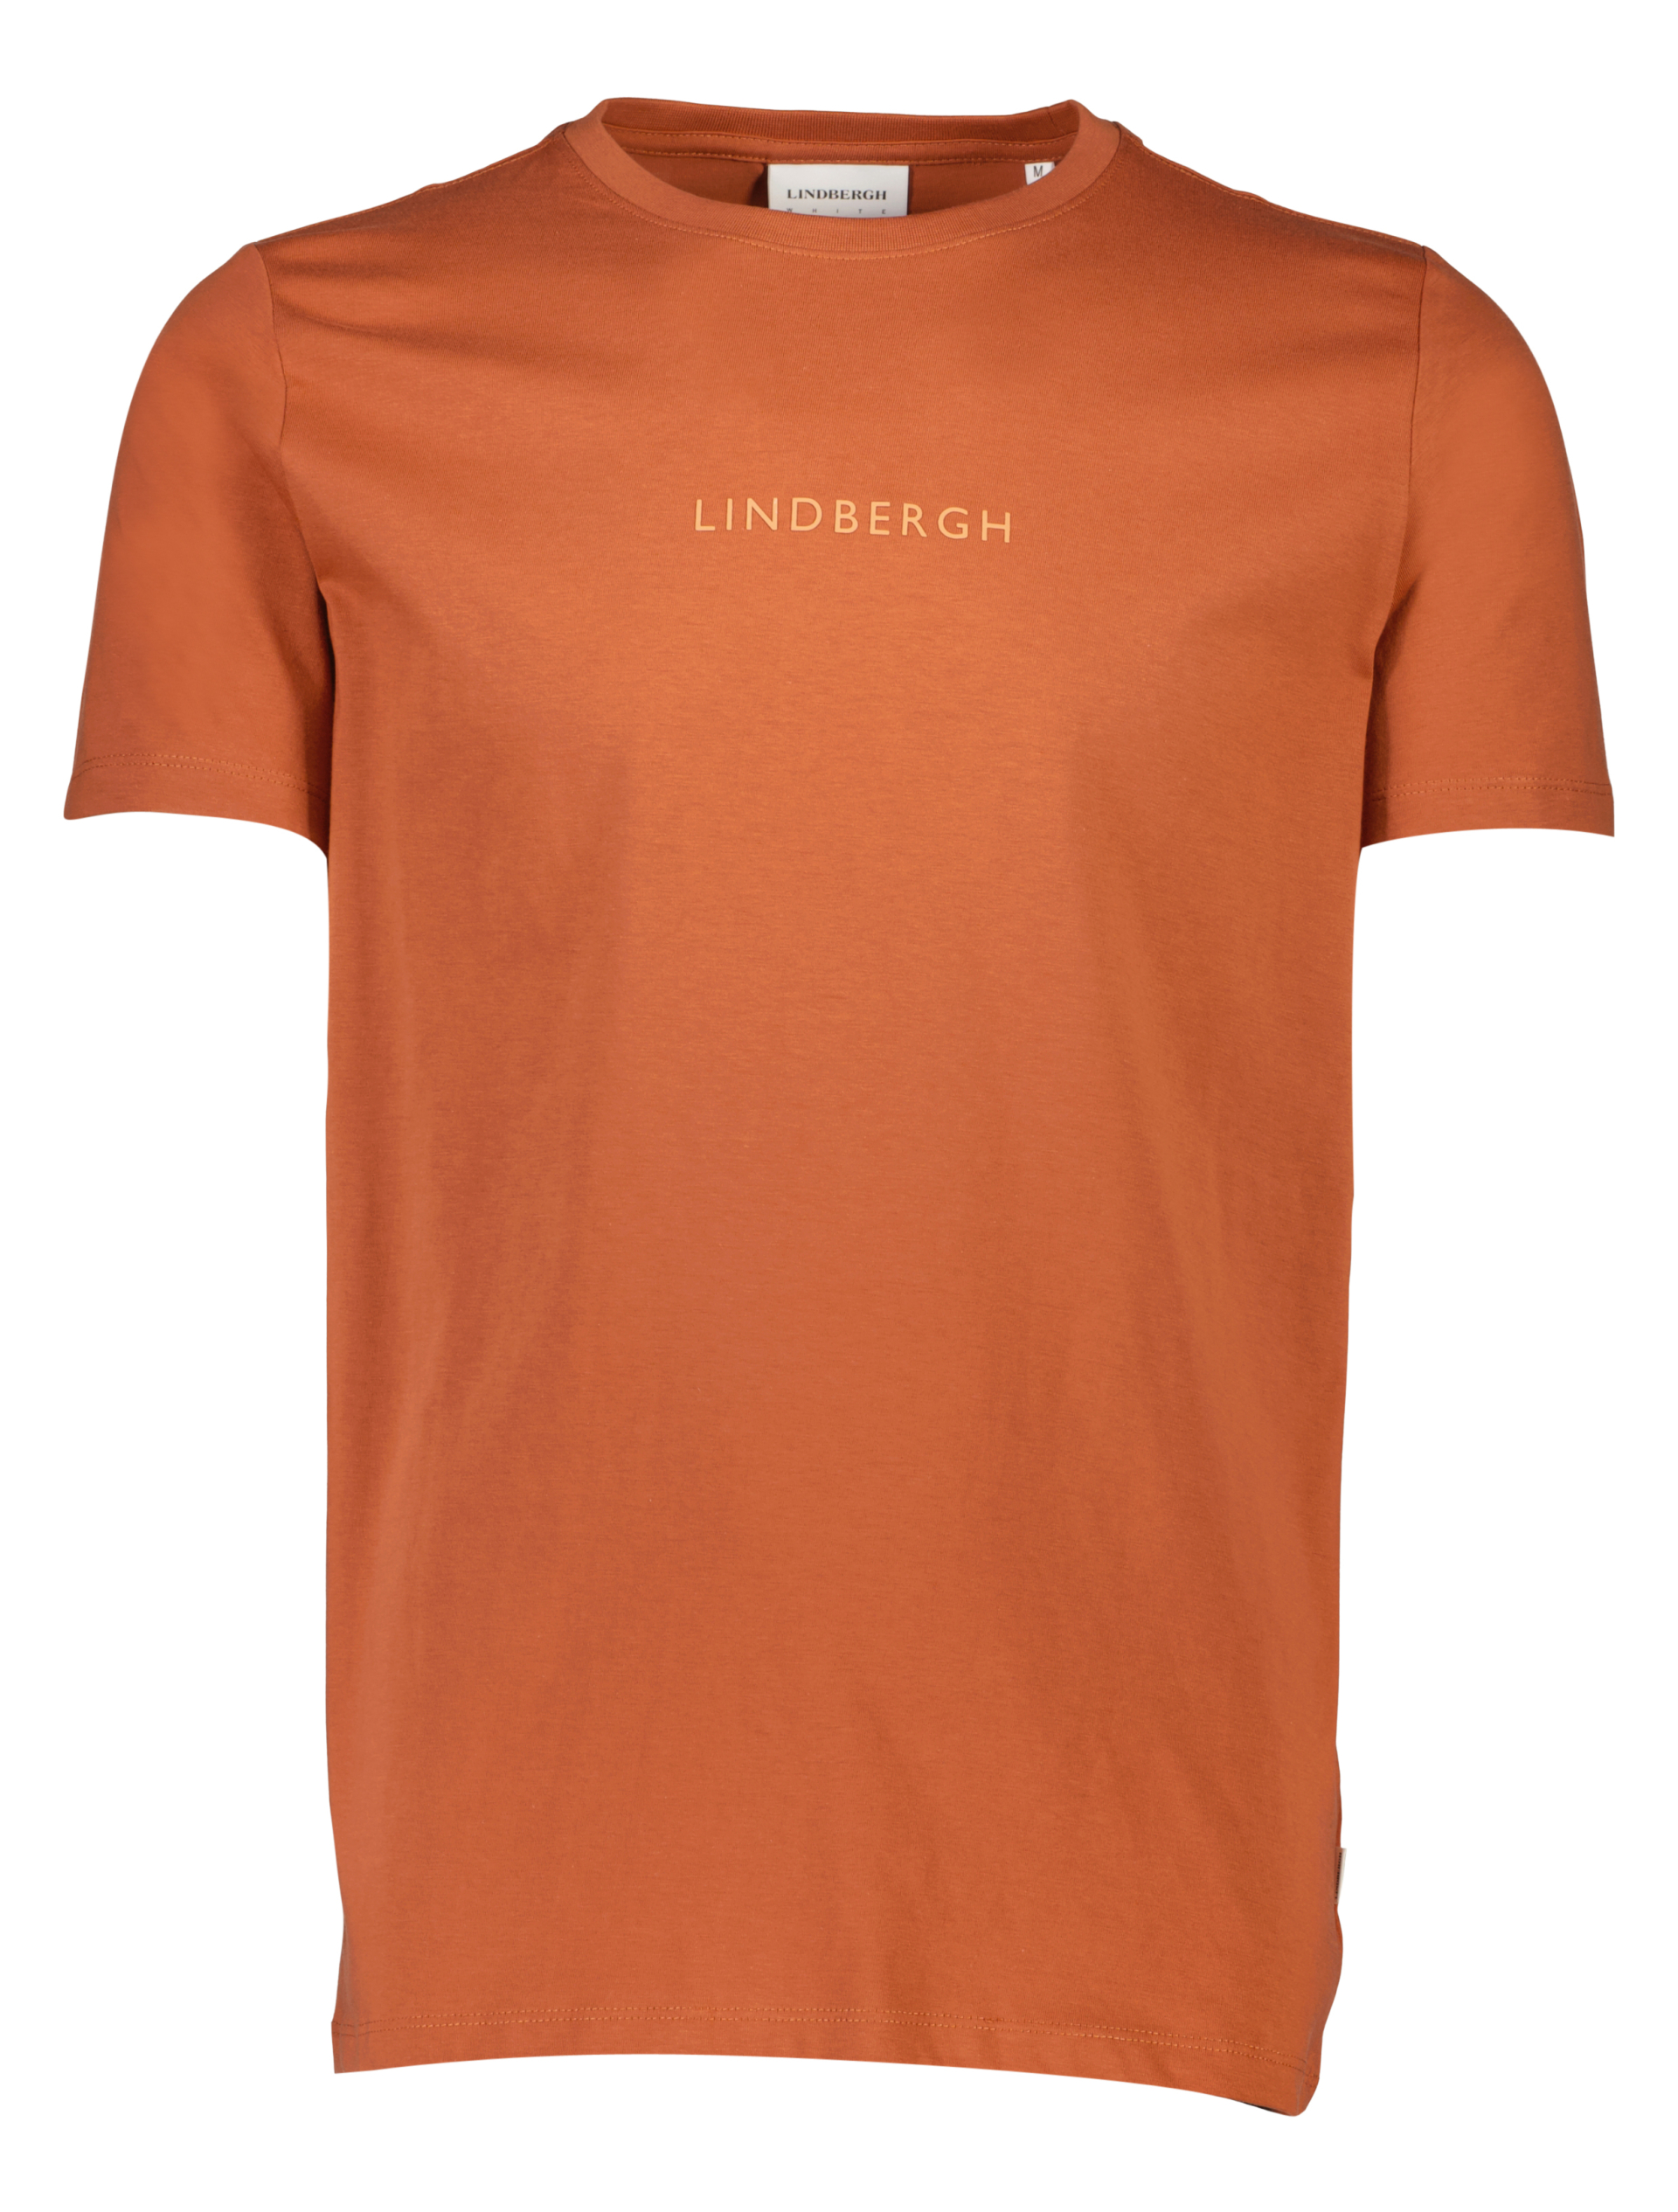 Lindbergh T-shirt sand / clay